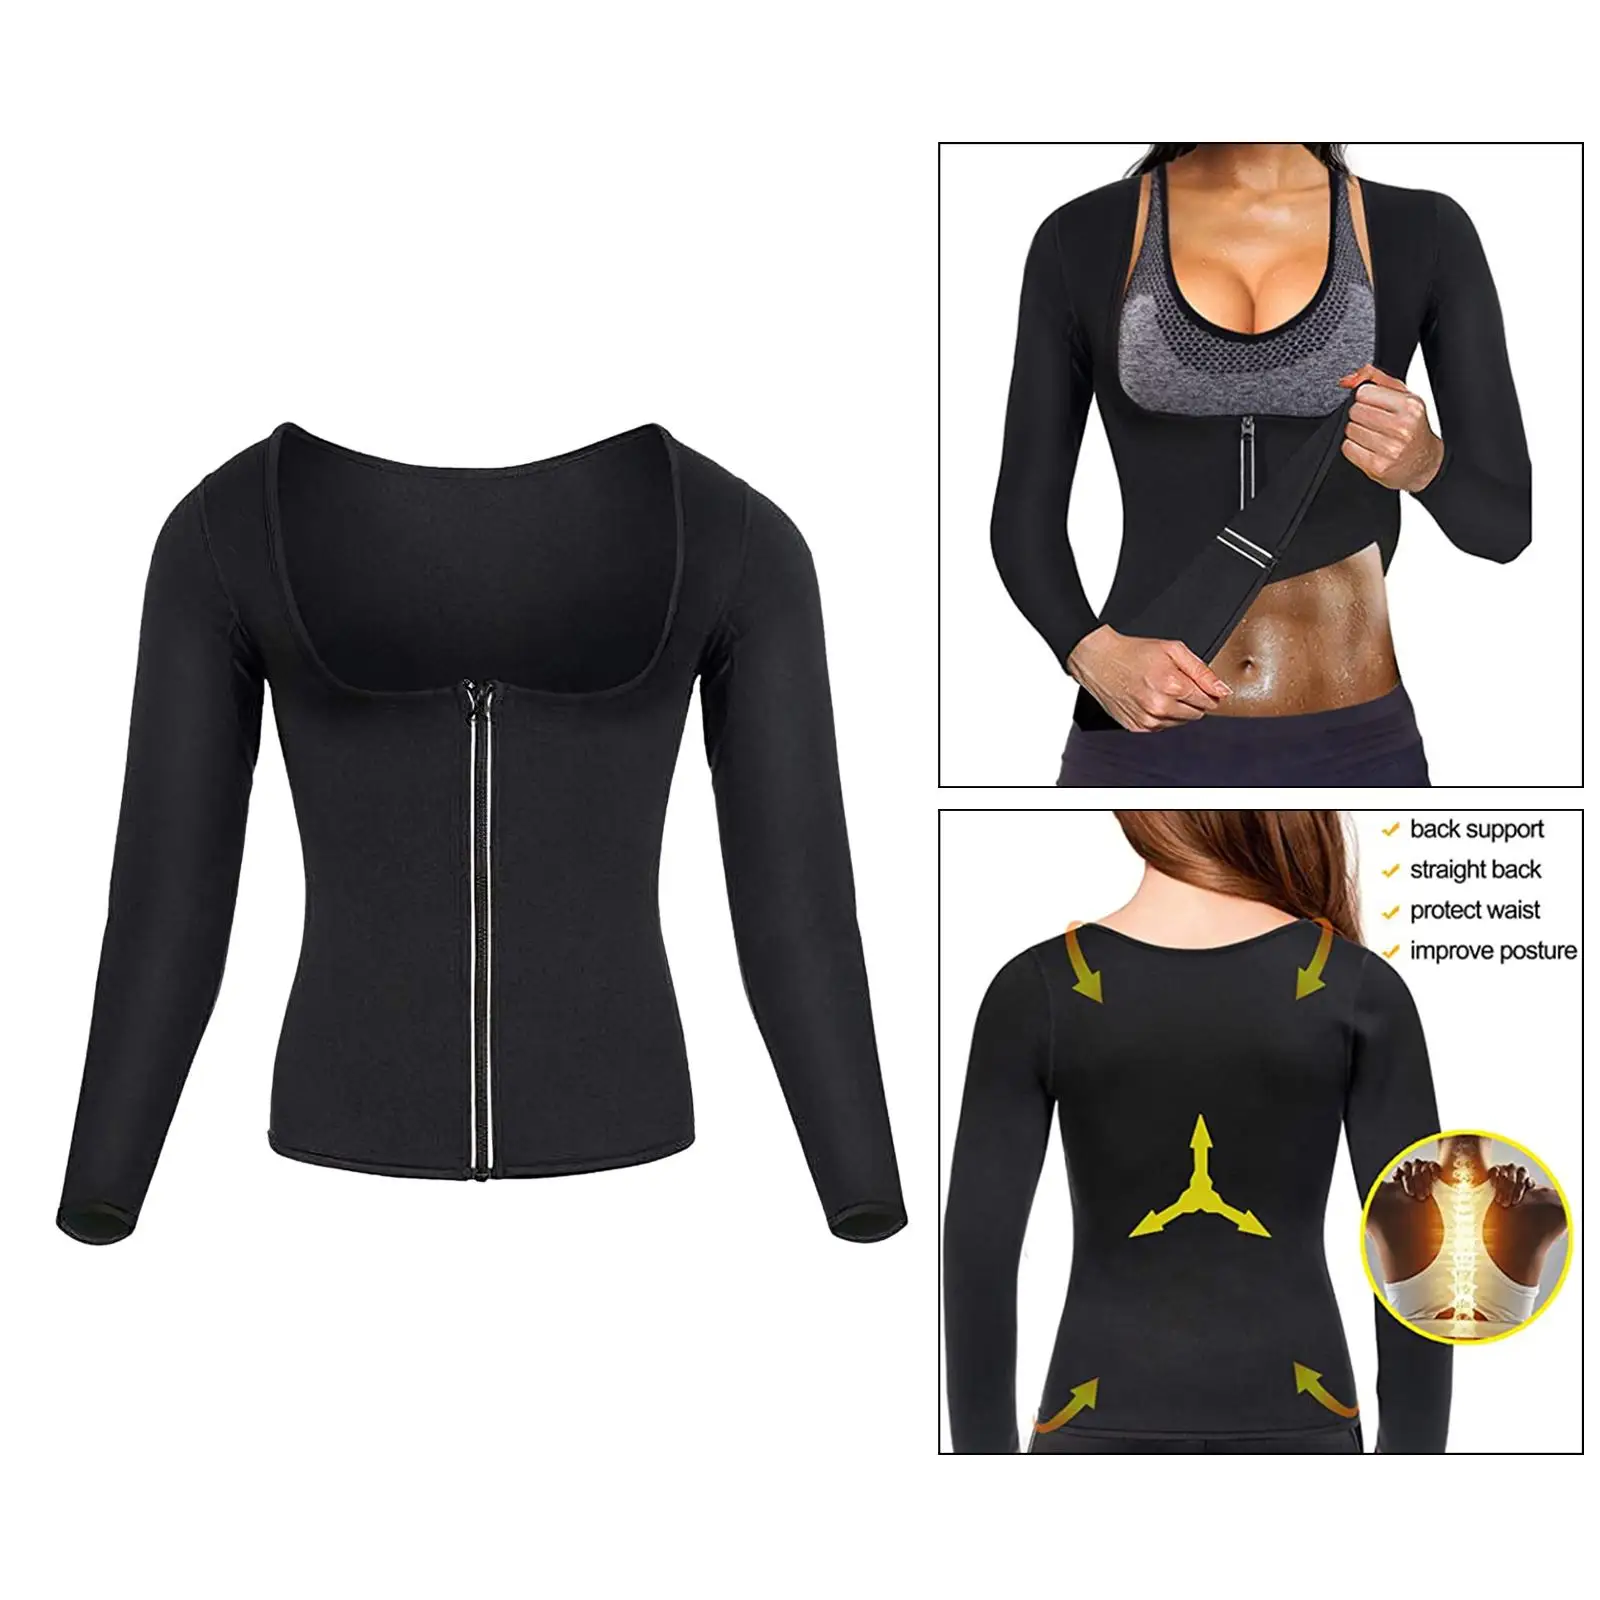 Women`s Neoprene Sweat Sauna Suit Body Shaper Workout Weight Loss Hot Waist Trainer Shirt Top with Sleeves